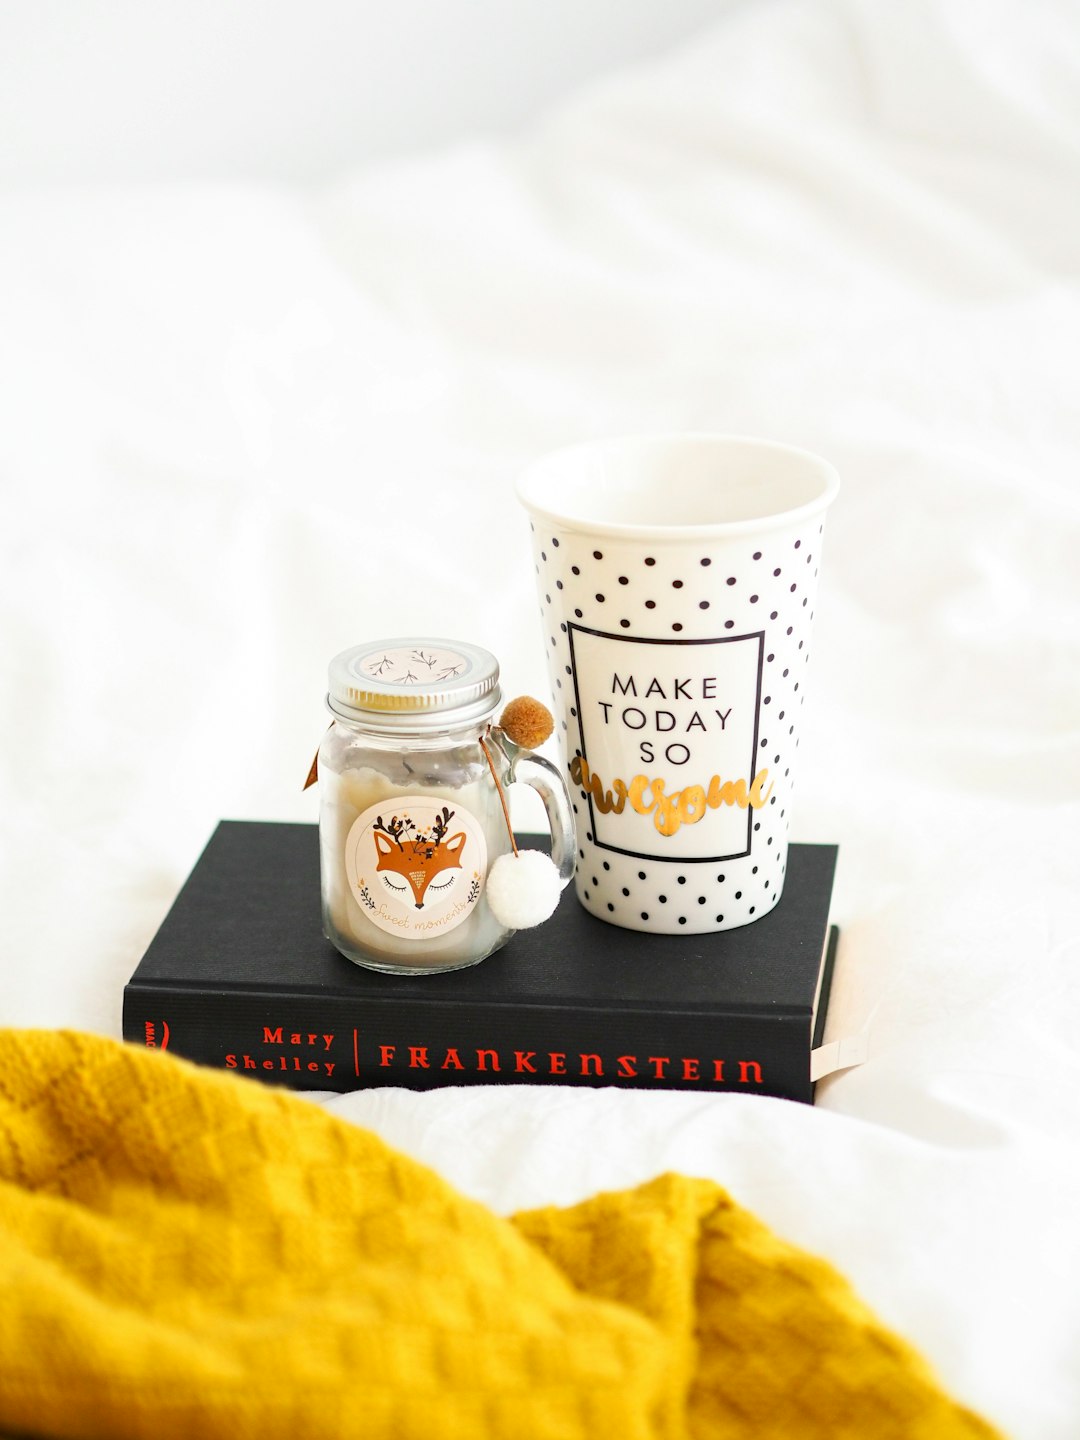 white and black ceramic mug beside white and black polka dot ceramic mug on black book